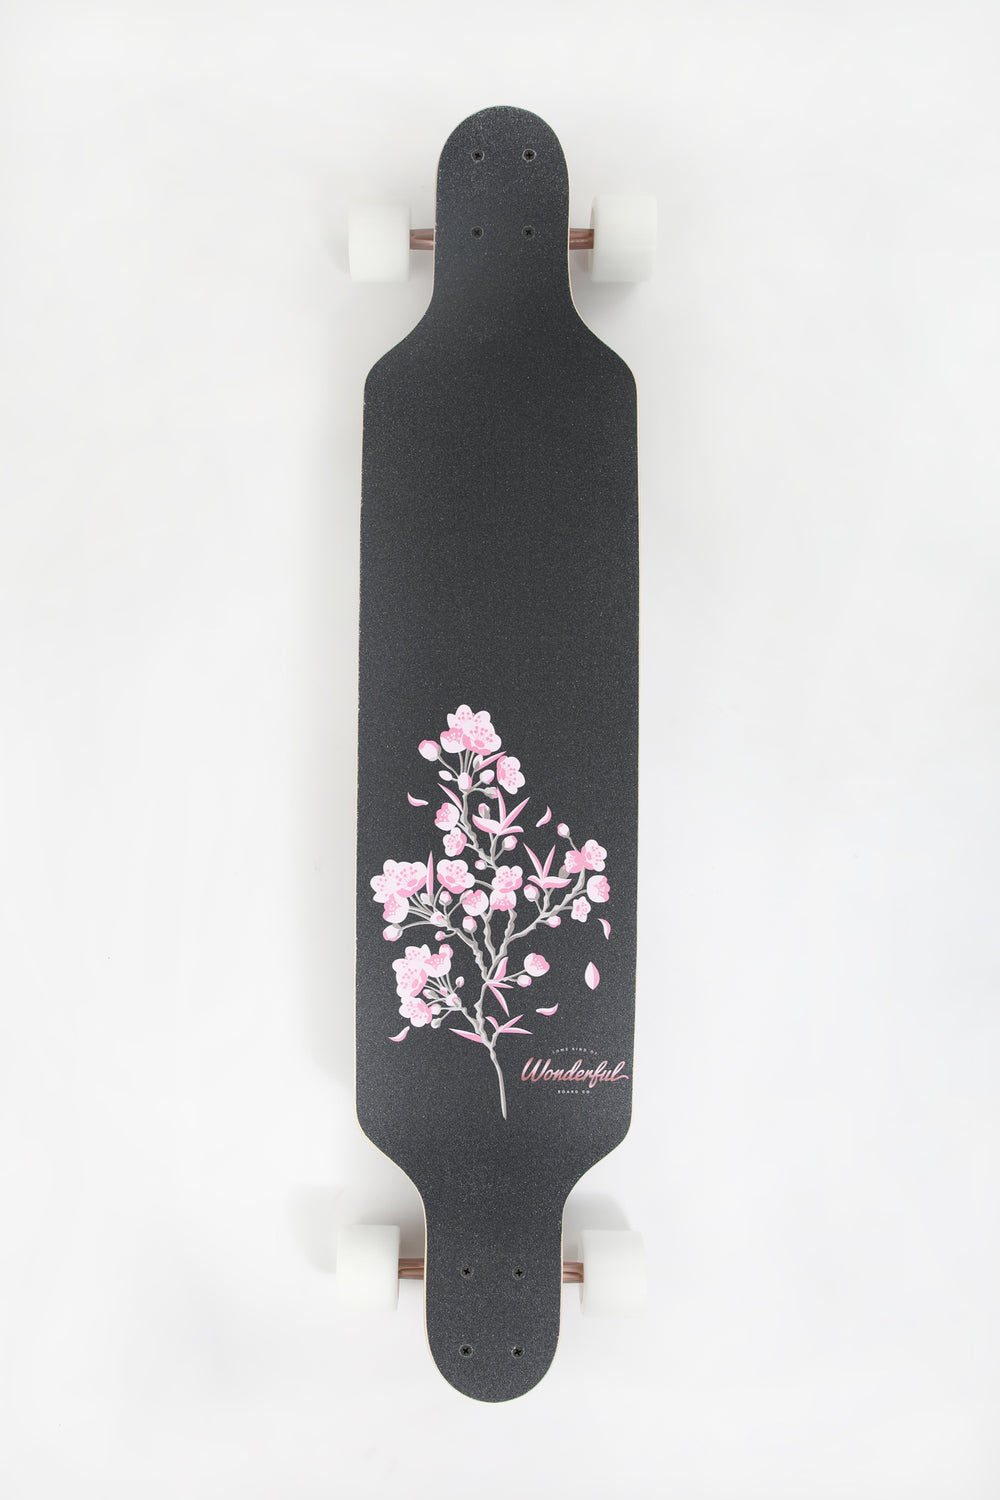 Wonderful Cherry Blossom Longboard 41